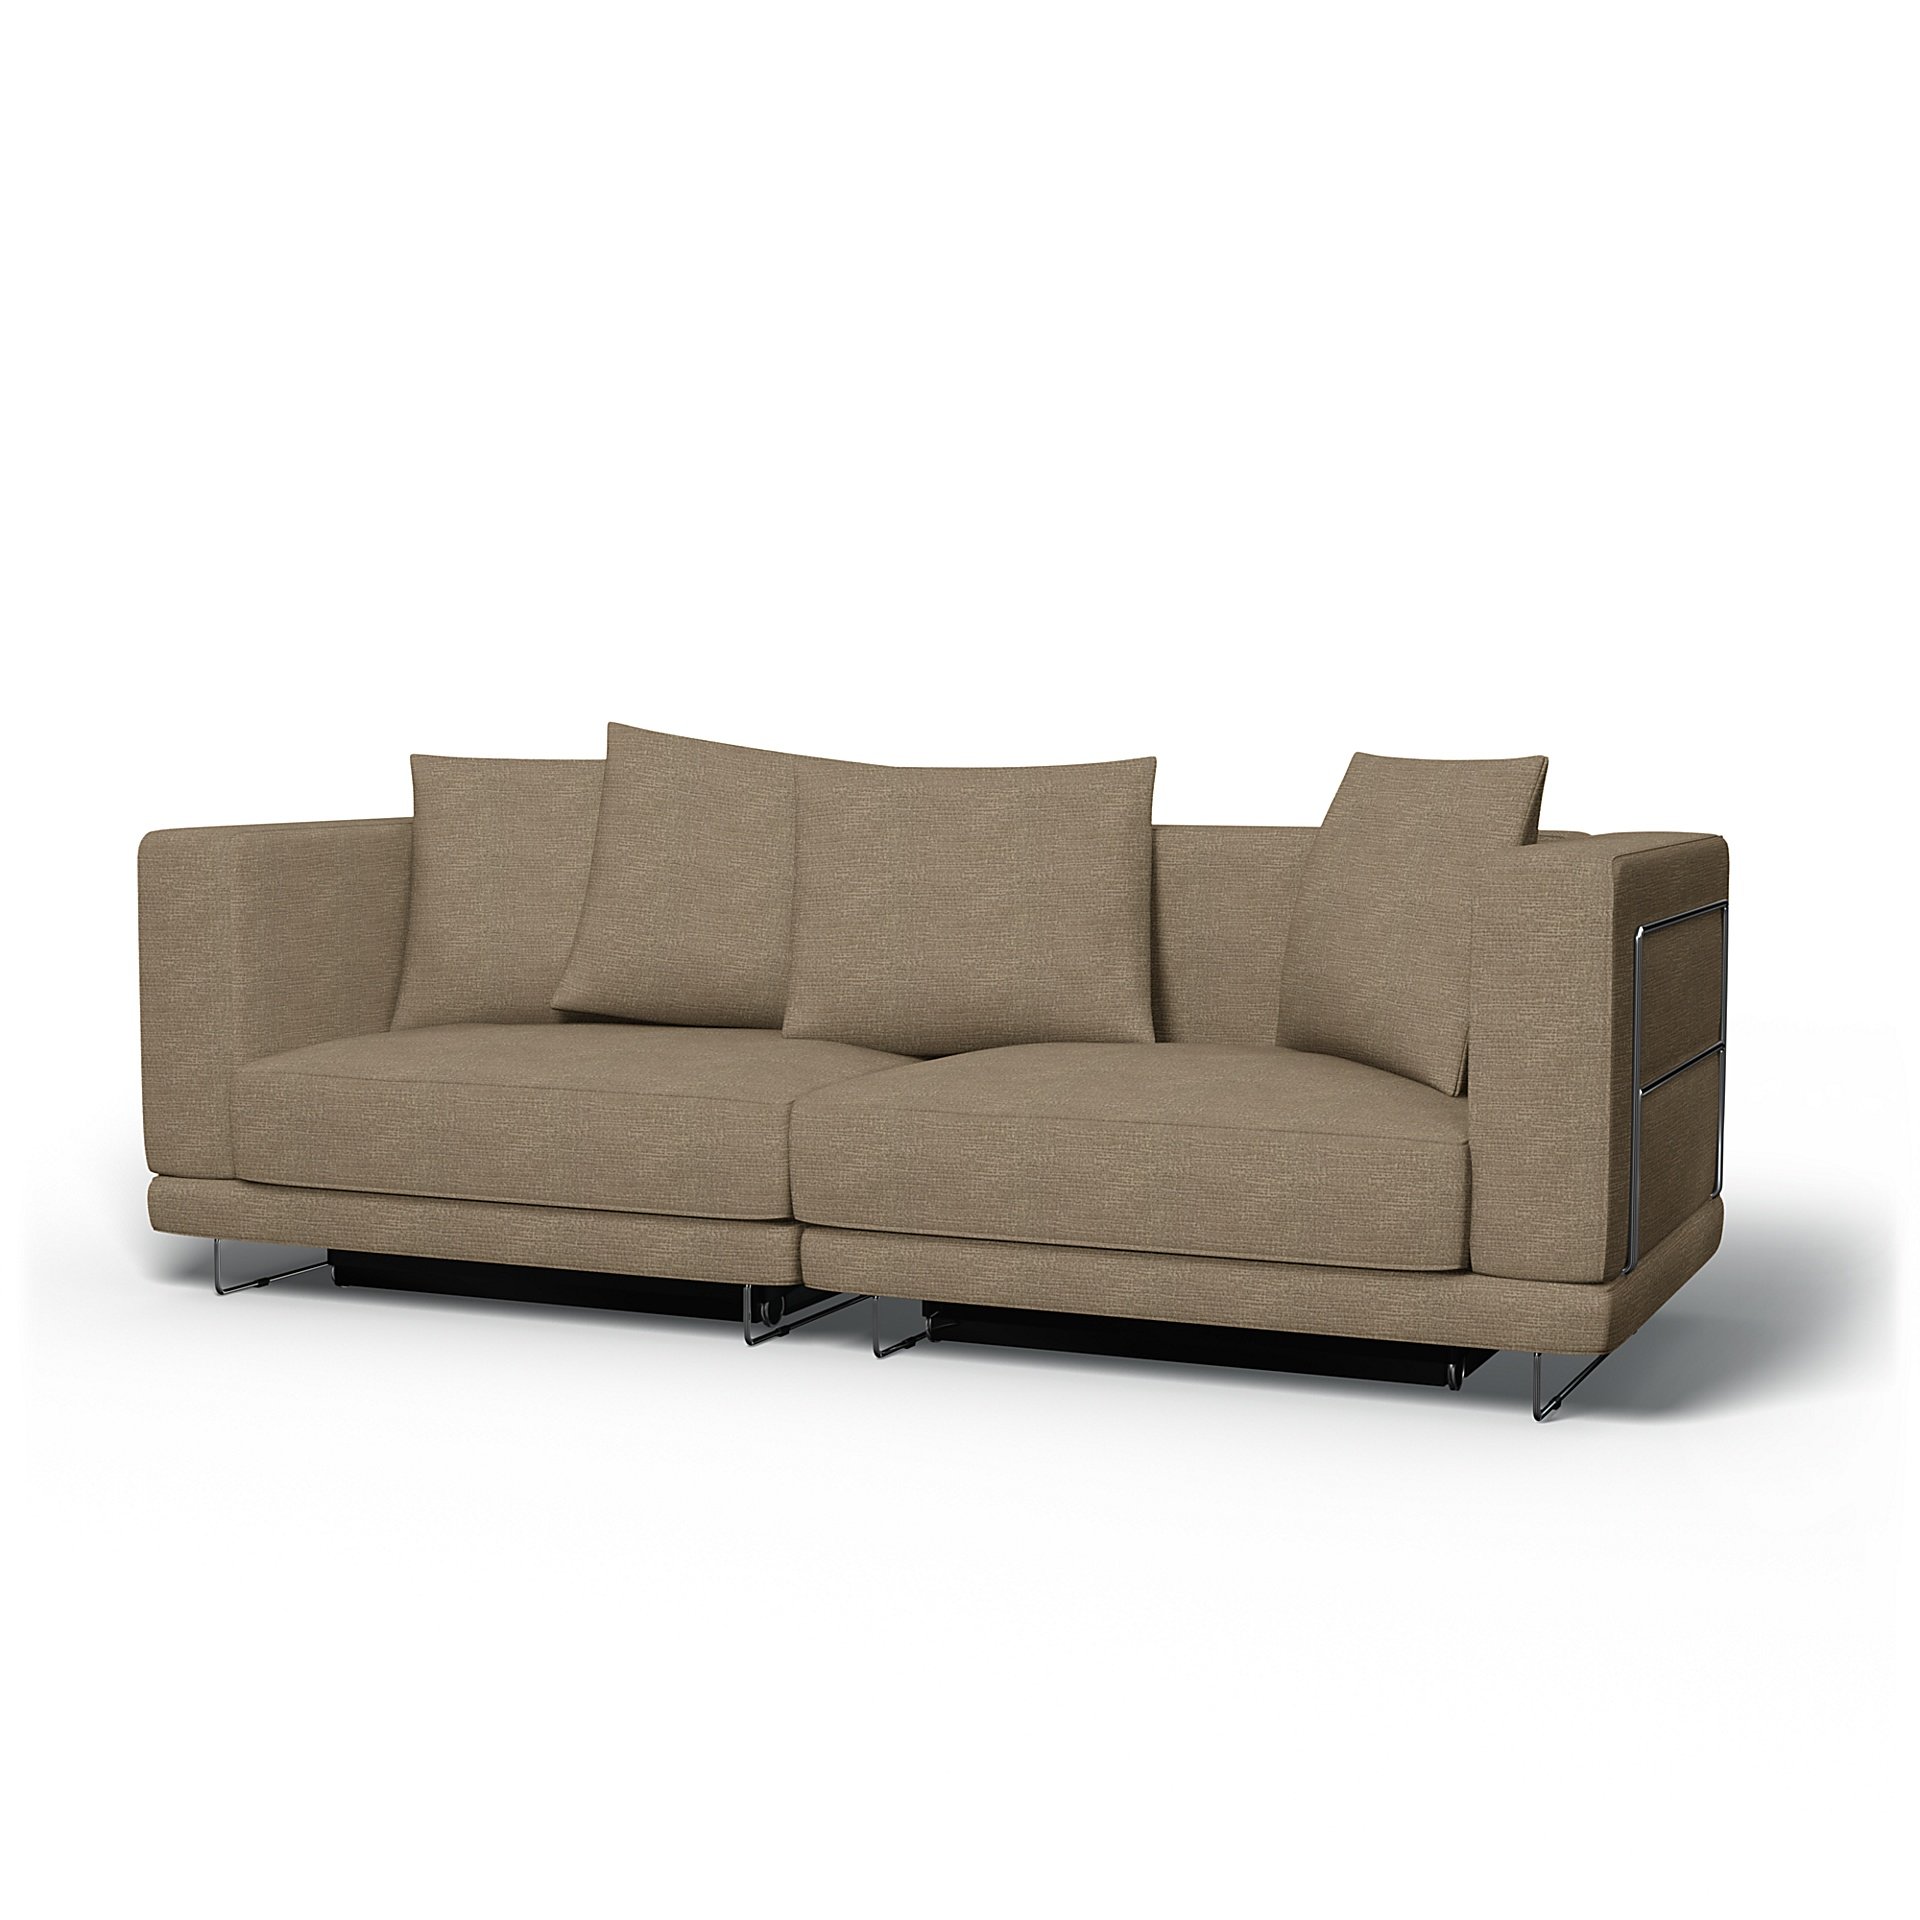 IKEA - Tylosand Sofa Bed Cover, Camel, Boucle & Texture - Bemz